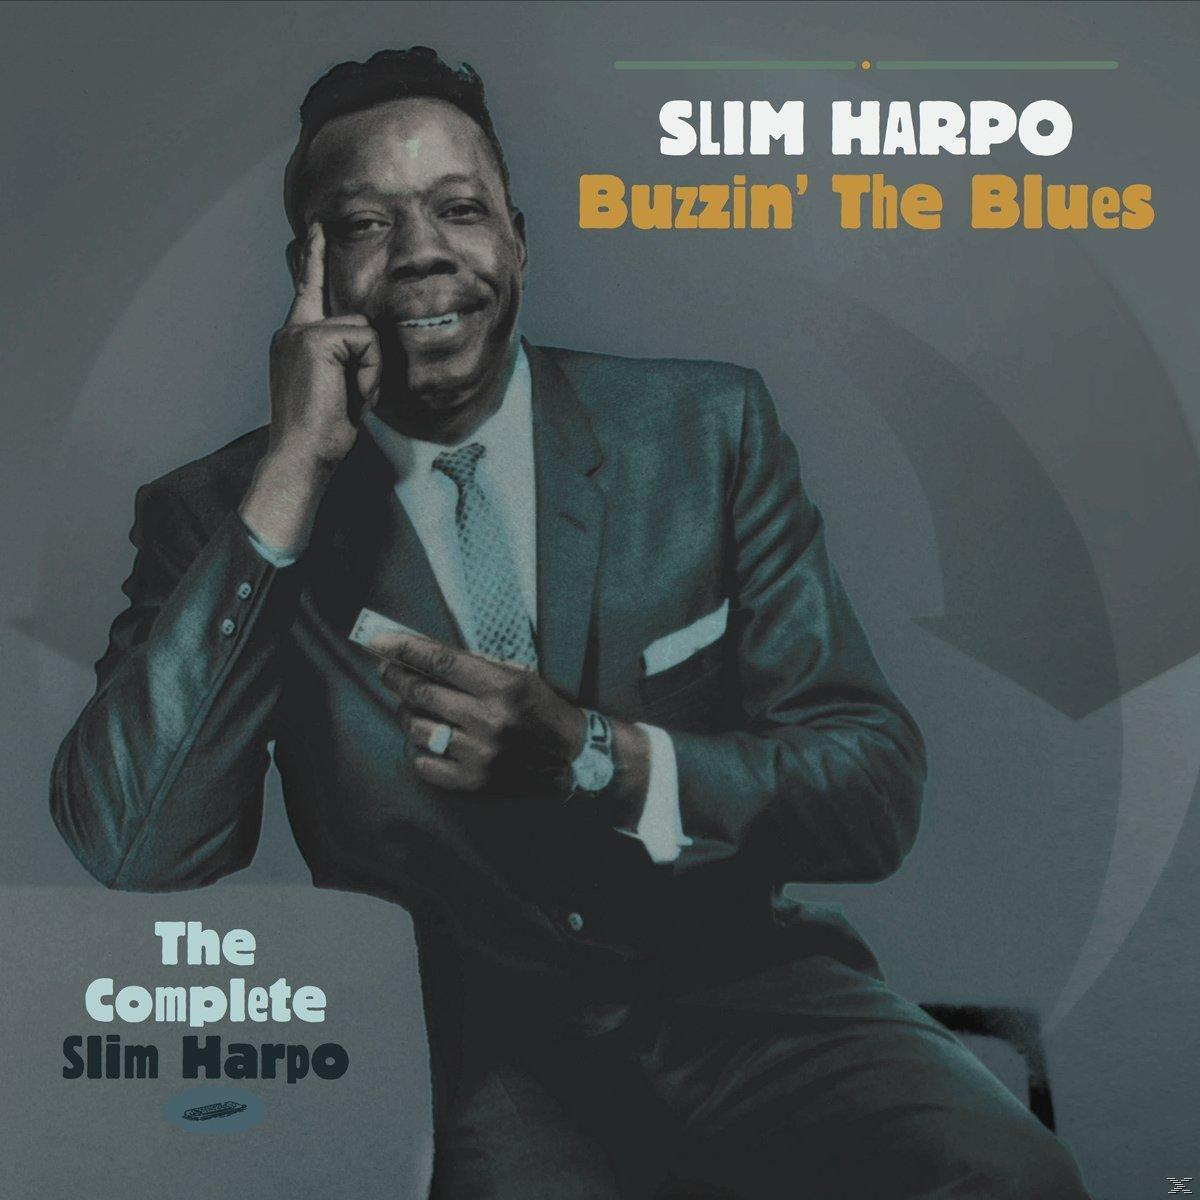 Slim Harpo (CD) Harpo Slim Blues-The Buzzin\' - - Complete 5-CD The